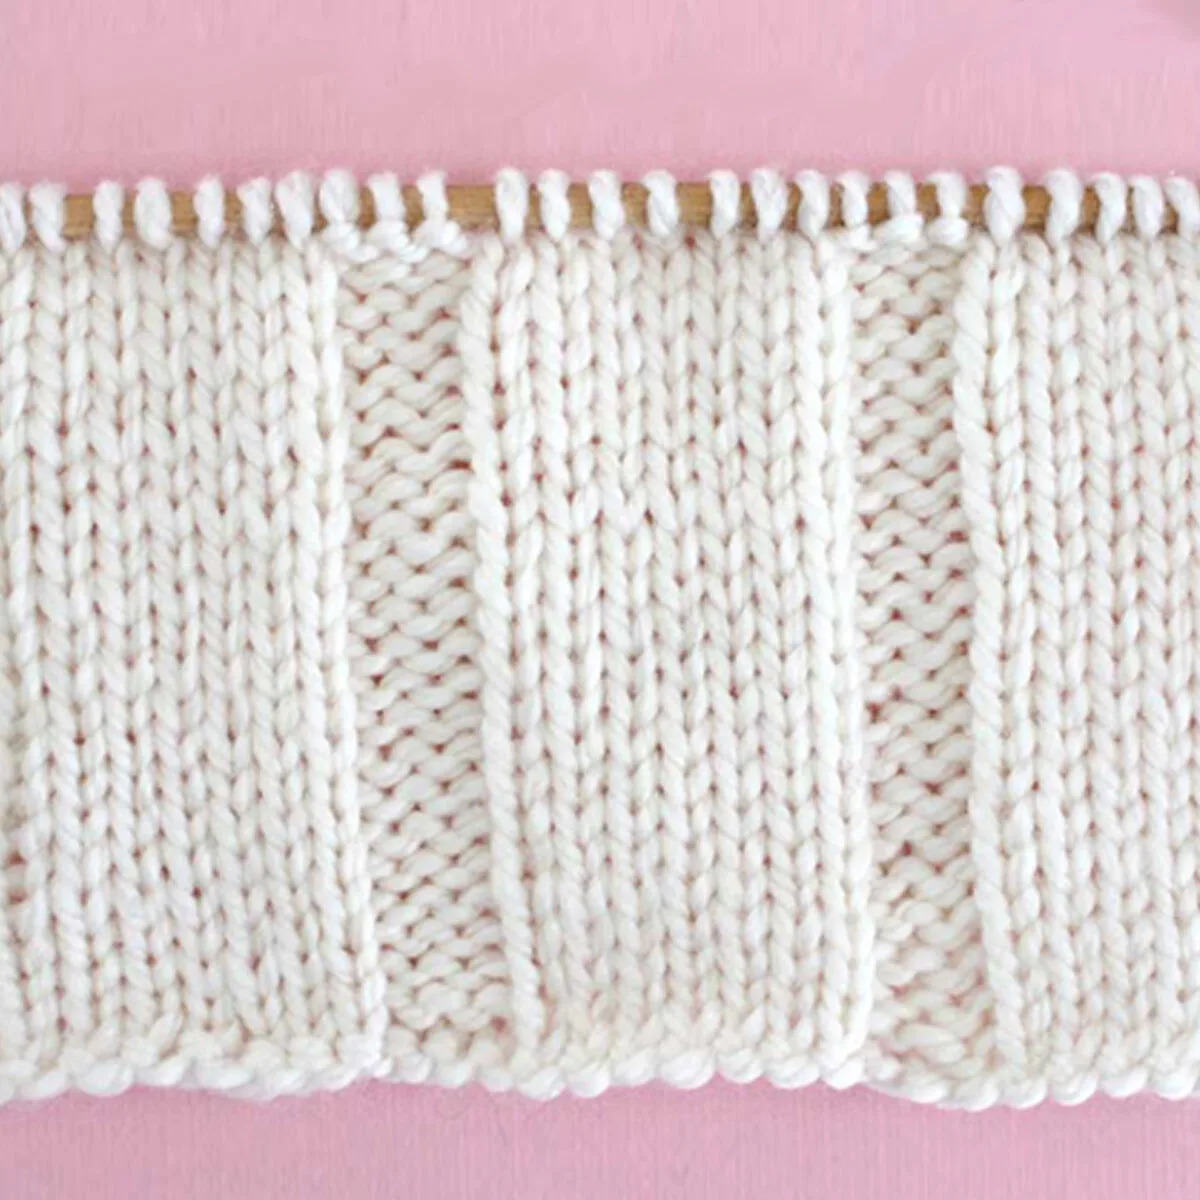 7x3 Rib Knit Stitch Pattern in white yarn on knitting needle.